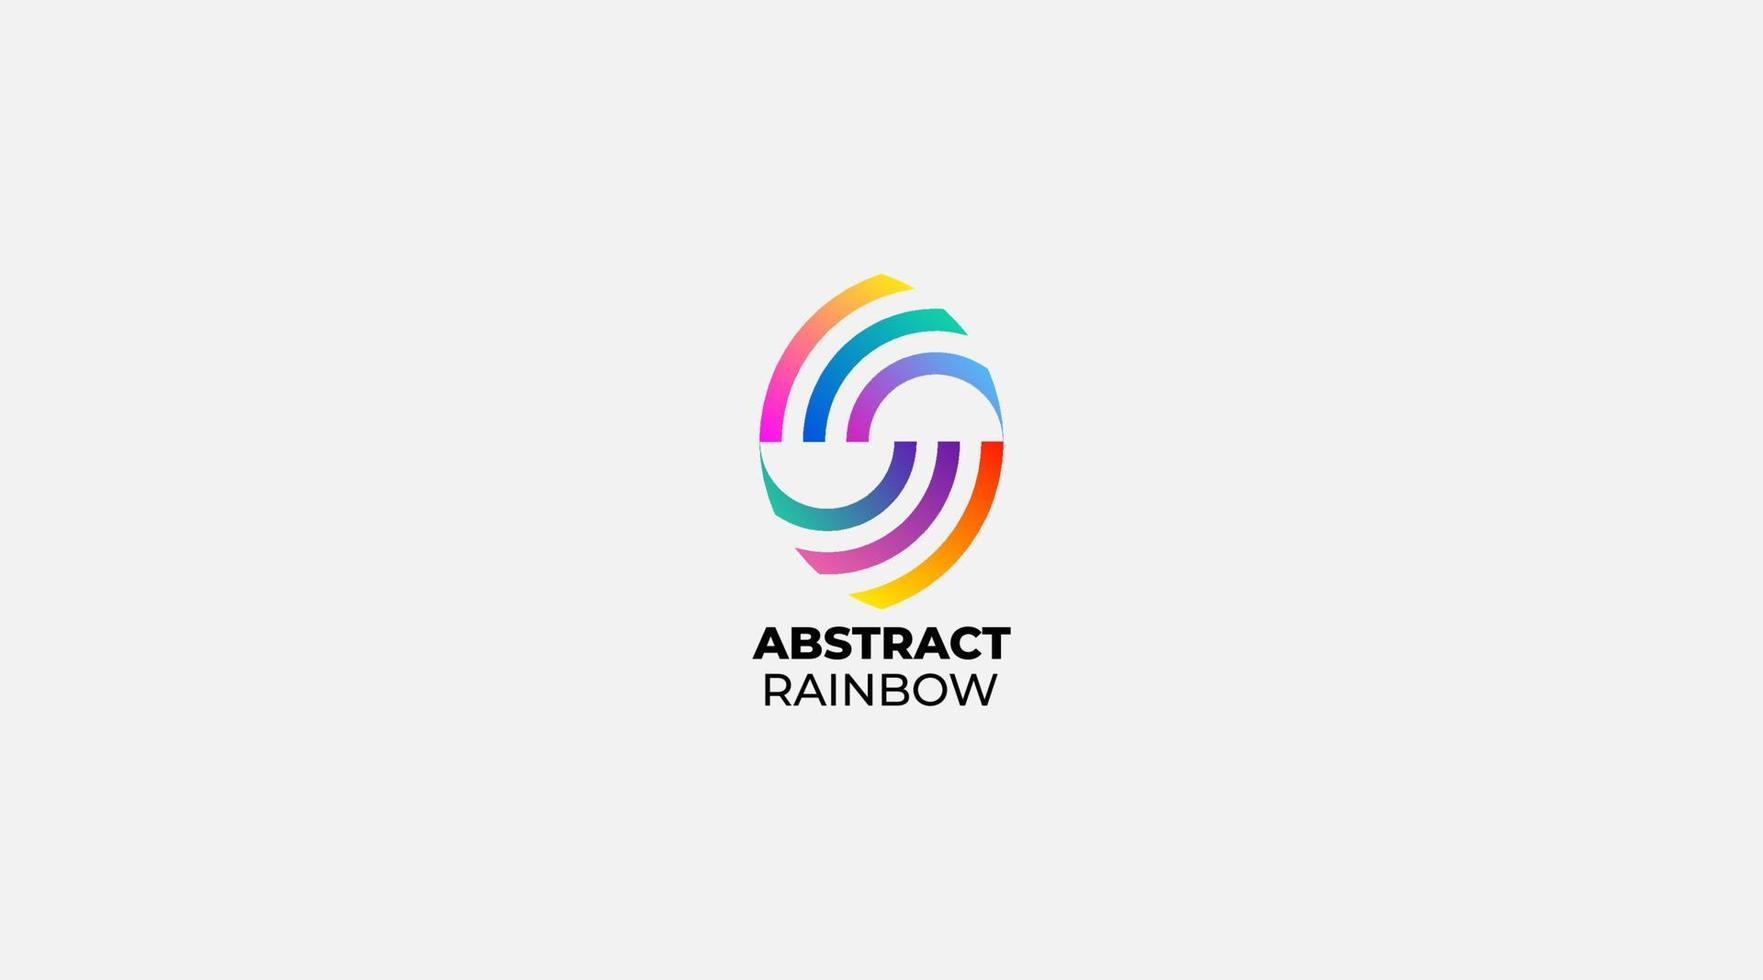 Abstract rainbow vector logo design illustration icon